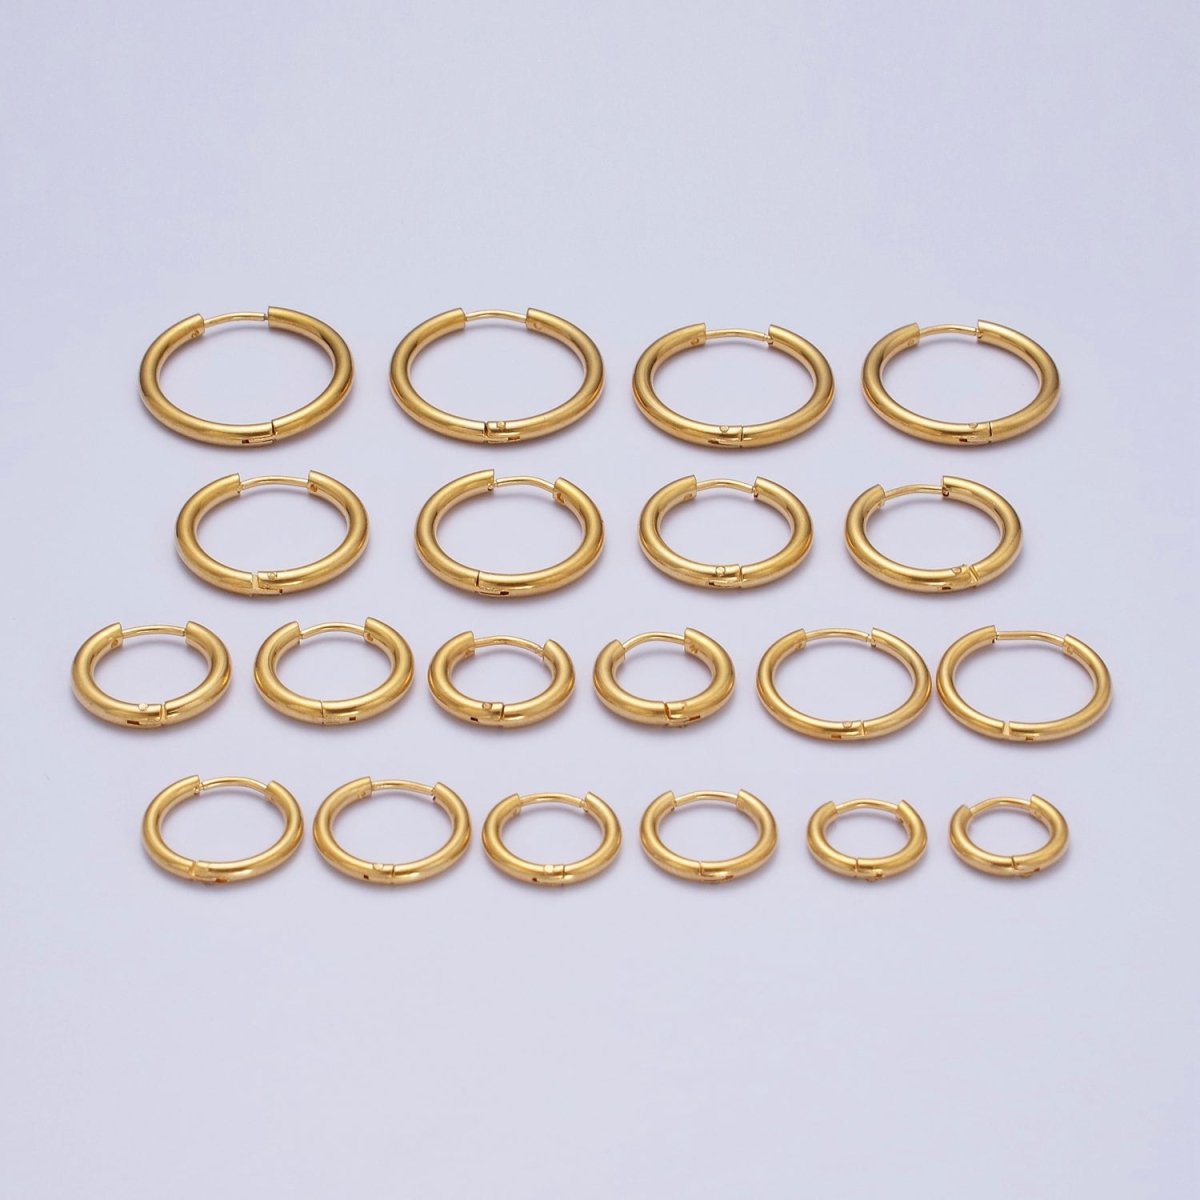 24K Gold Filled Hoop Earrings-Sleeper Earrings Hypoallergenic Earring Hoops Women Hoops Everyday Simple Hoops-Tiny Hoops P-289 P-290 P-291 P-292 P-293 P-294 P-295 P-296 P-297 P-298 - DLUXCA